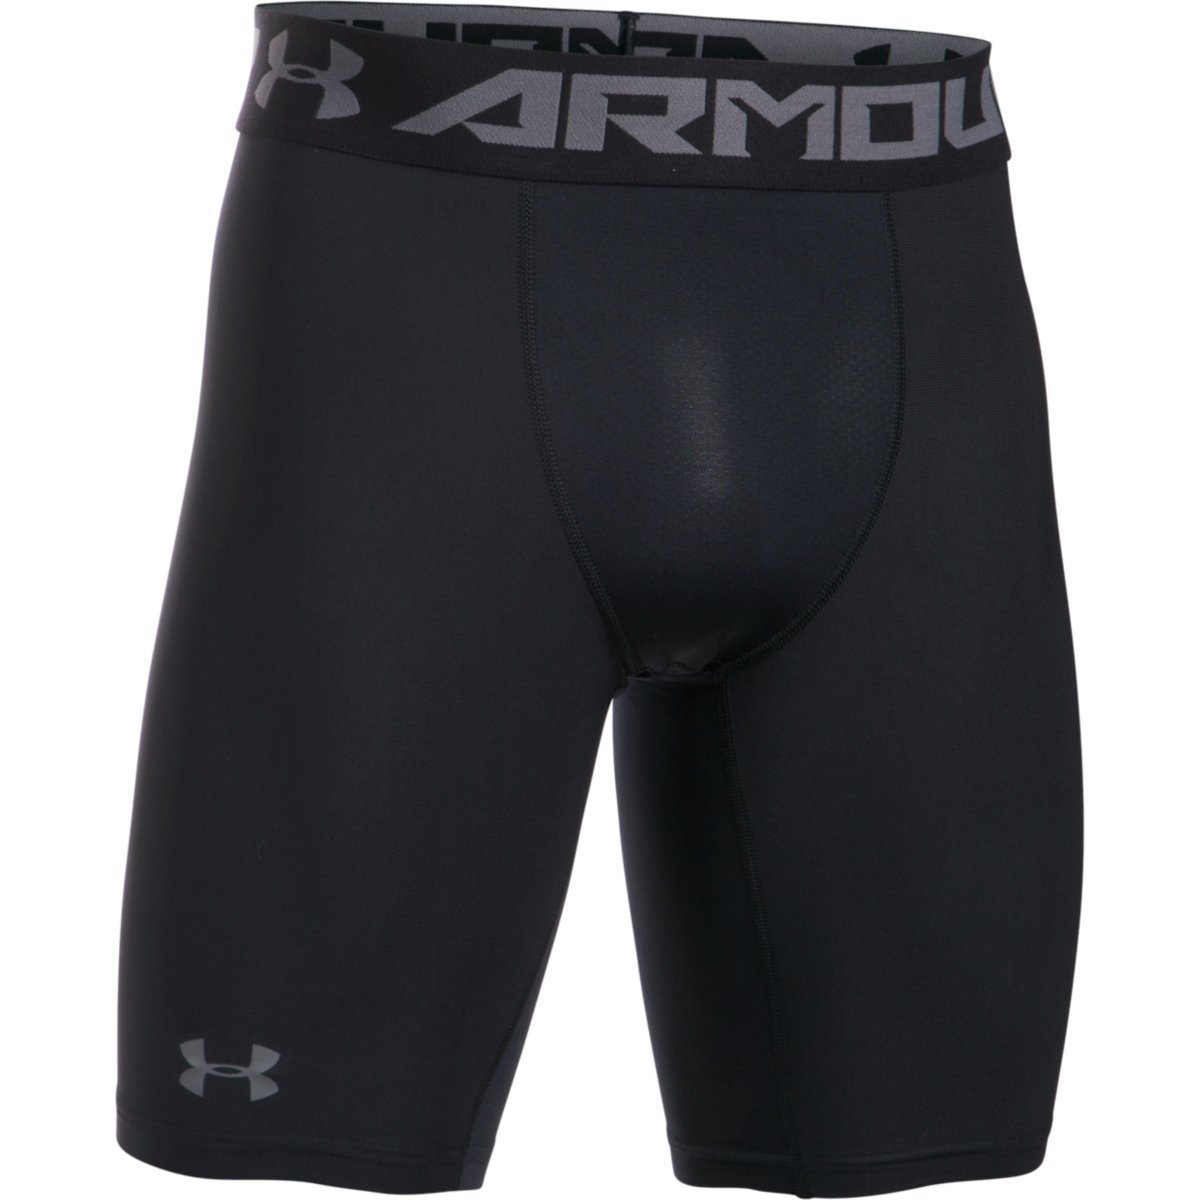 Under Armour Men's Heatgear Armour Long Compression Shorts